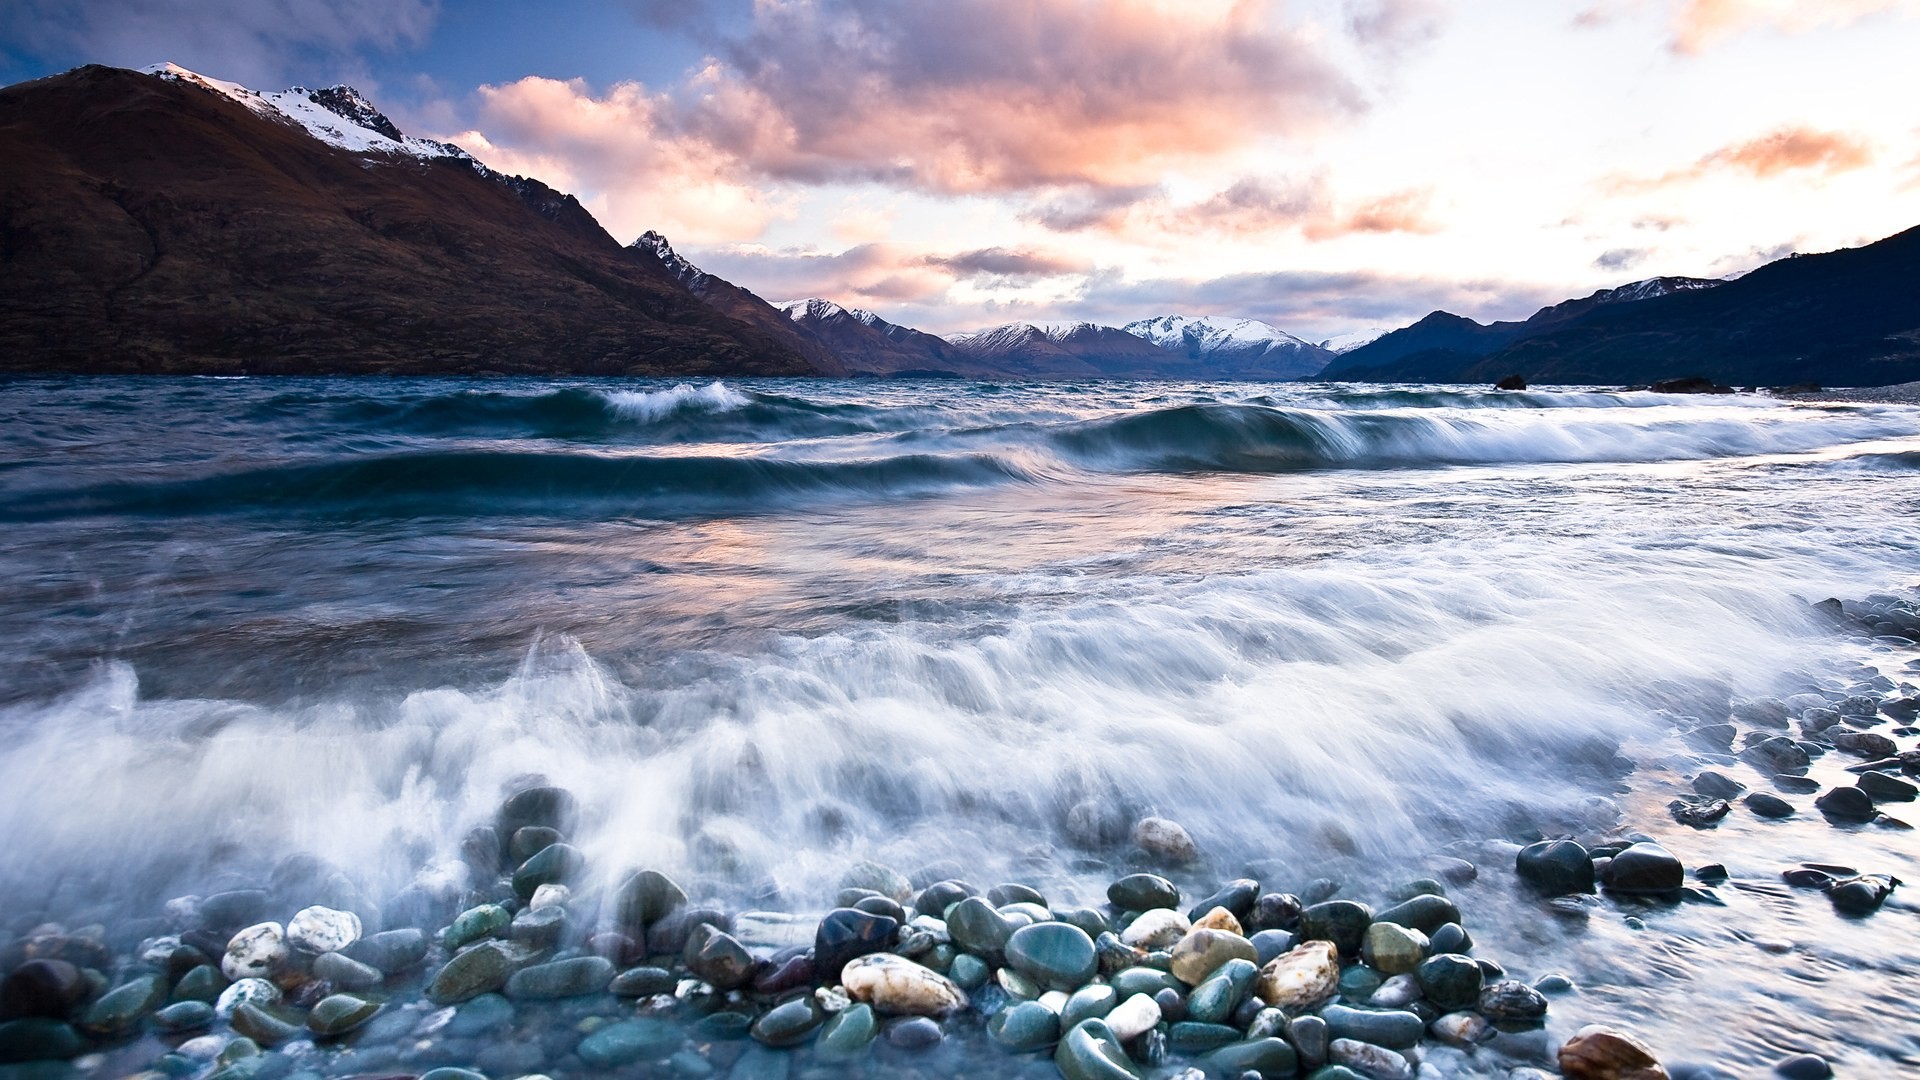 earth, ocean, mountain, pebbles, scenic, water, wave